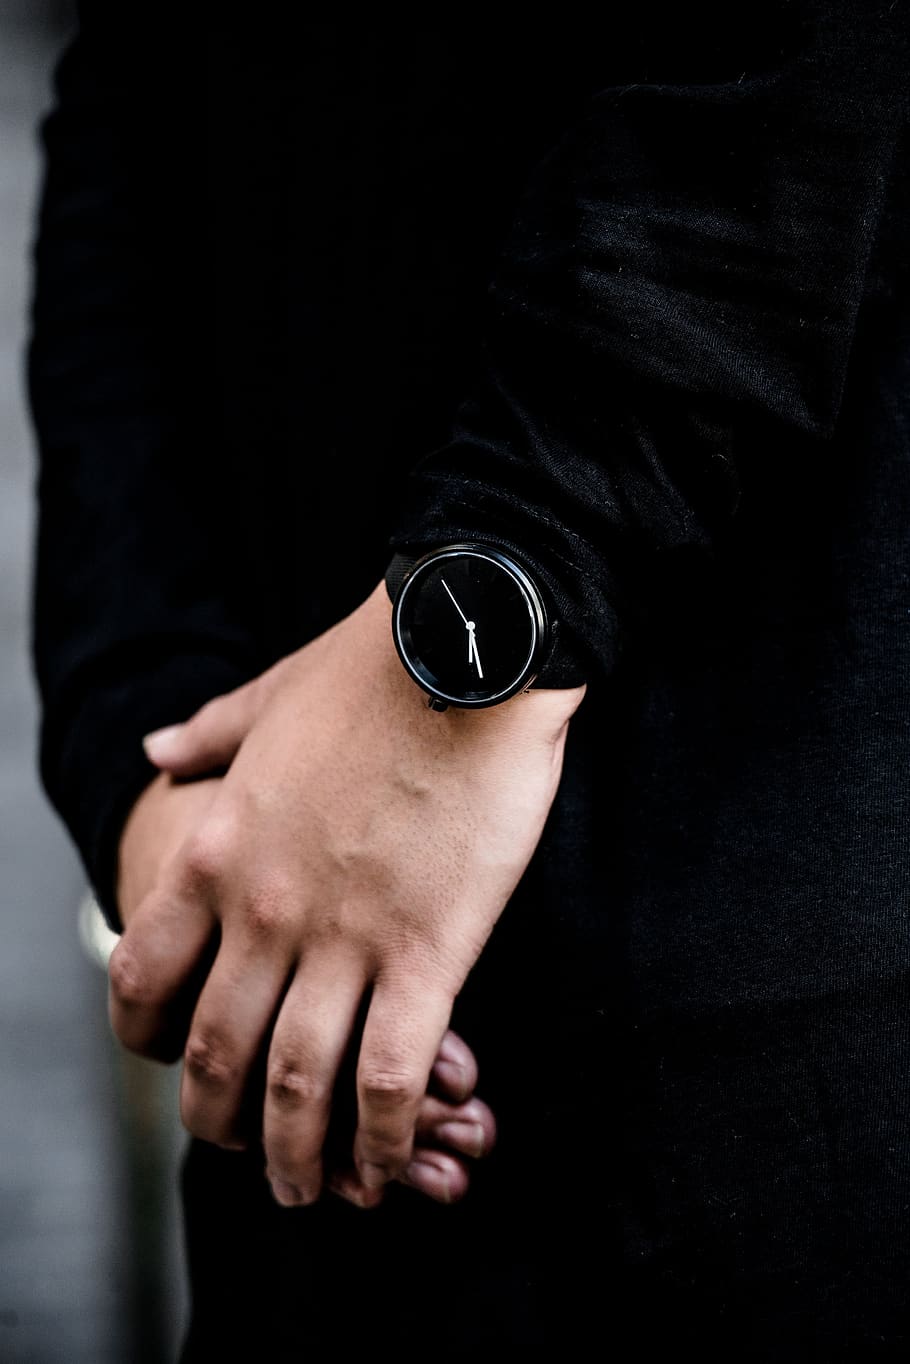 negro, moda, reloj, reloj de pulsera, tiempo, hombre, simple, minimalista, limpio, manos